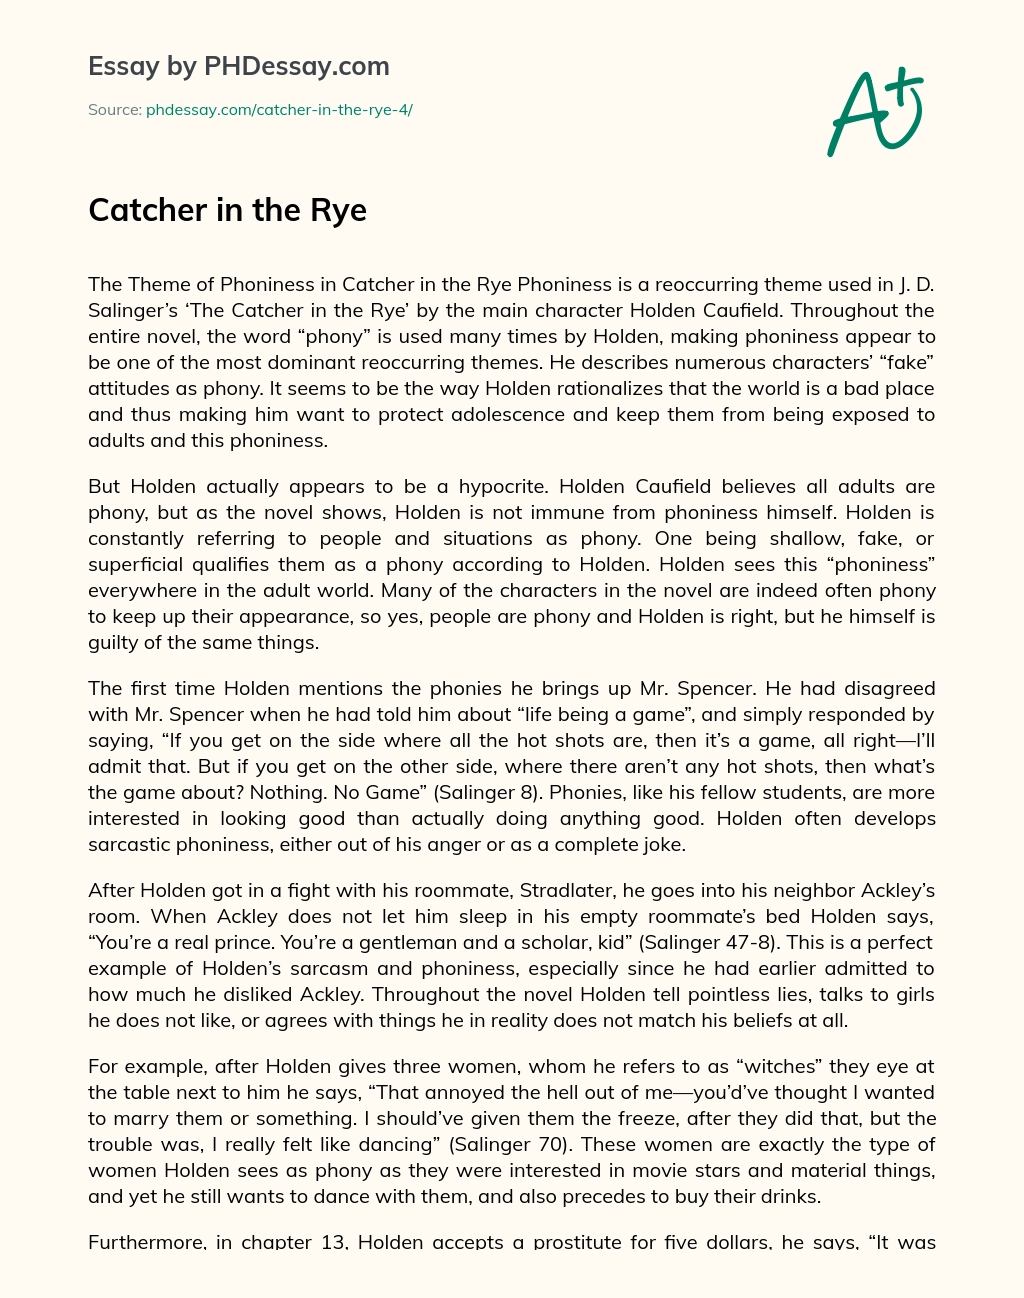 Catcher in the Rye essay